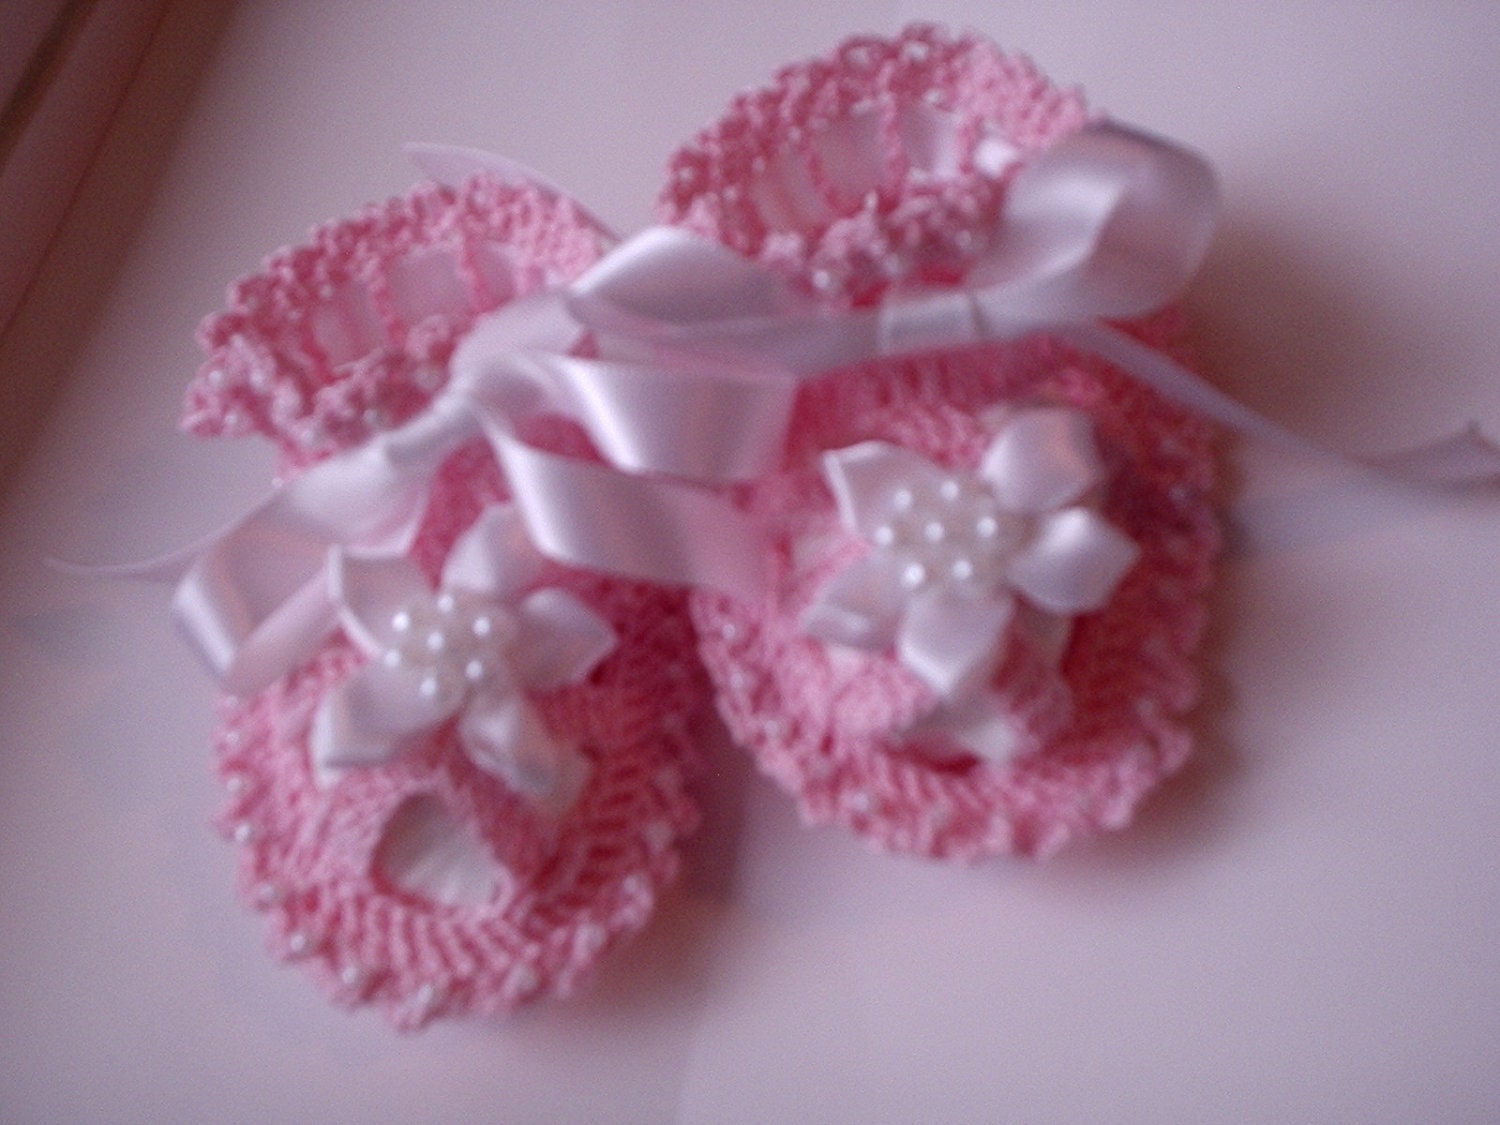 Custom, Crocheted Beaded Baby Booties Sandals for Baby Girl or Baby Boy custom orders, newborn photo prop